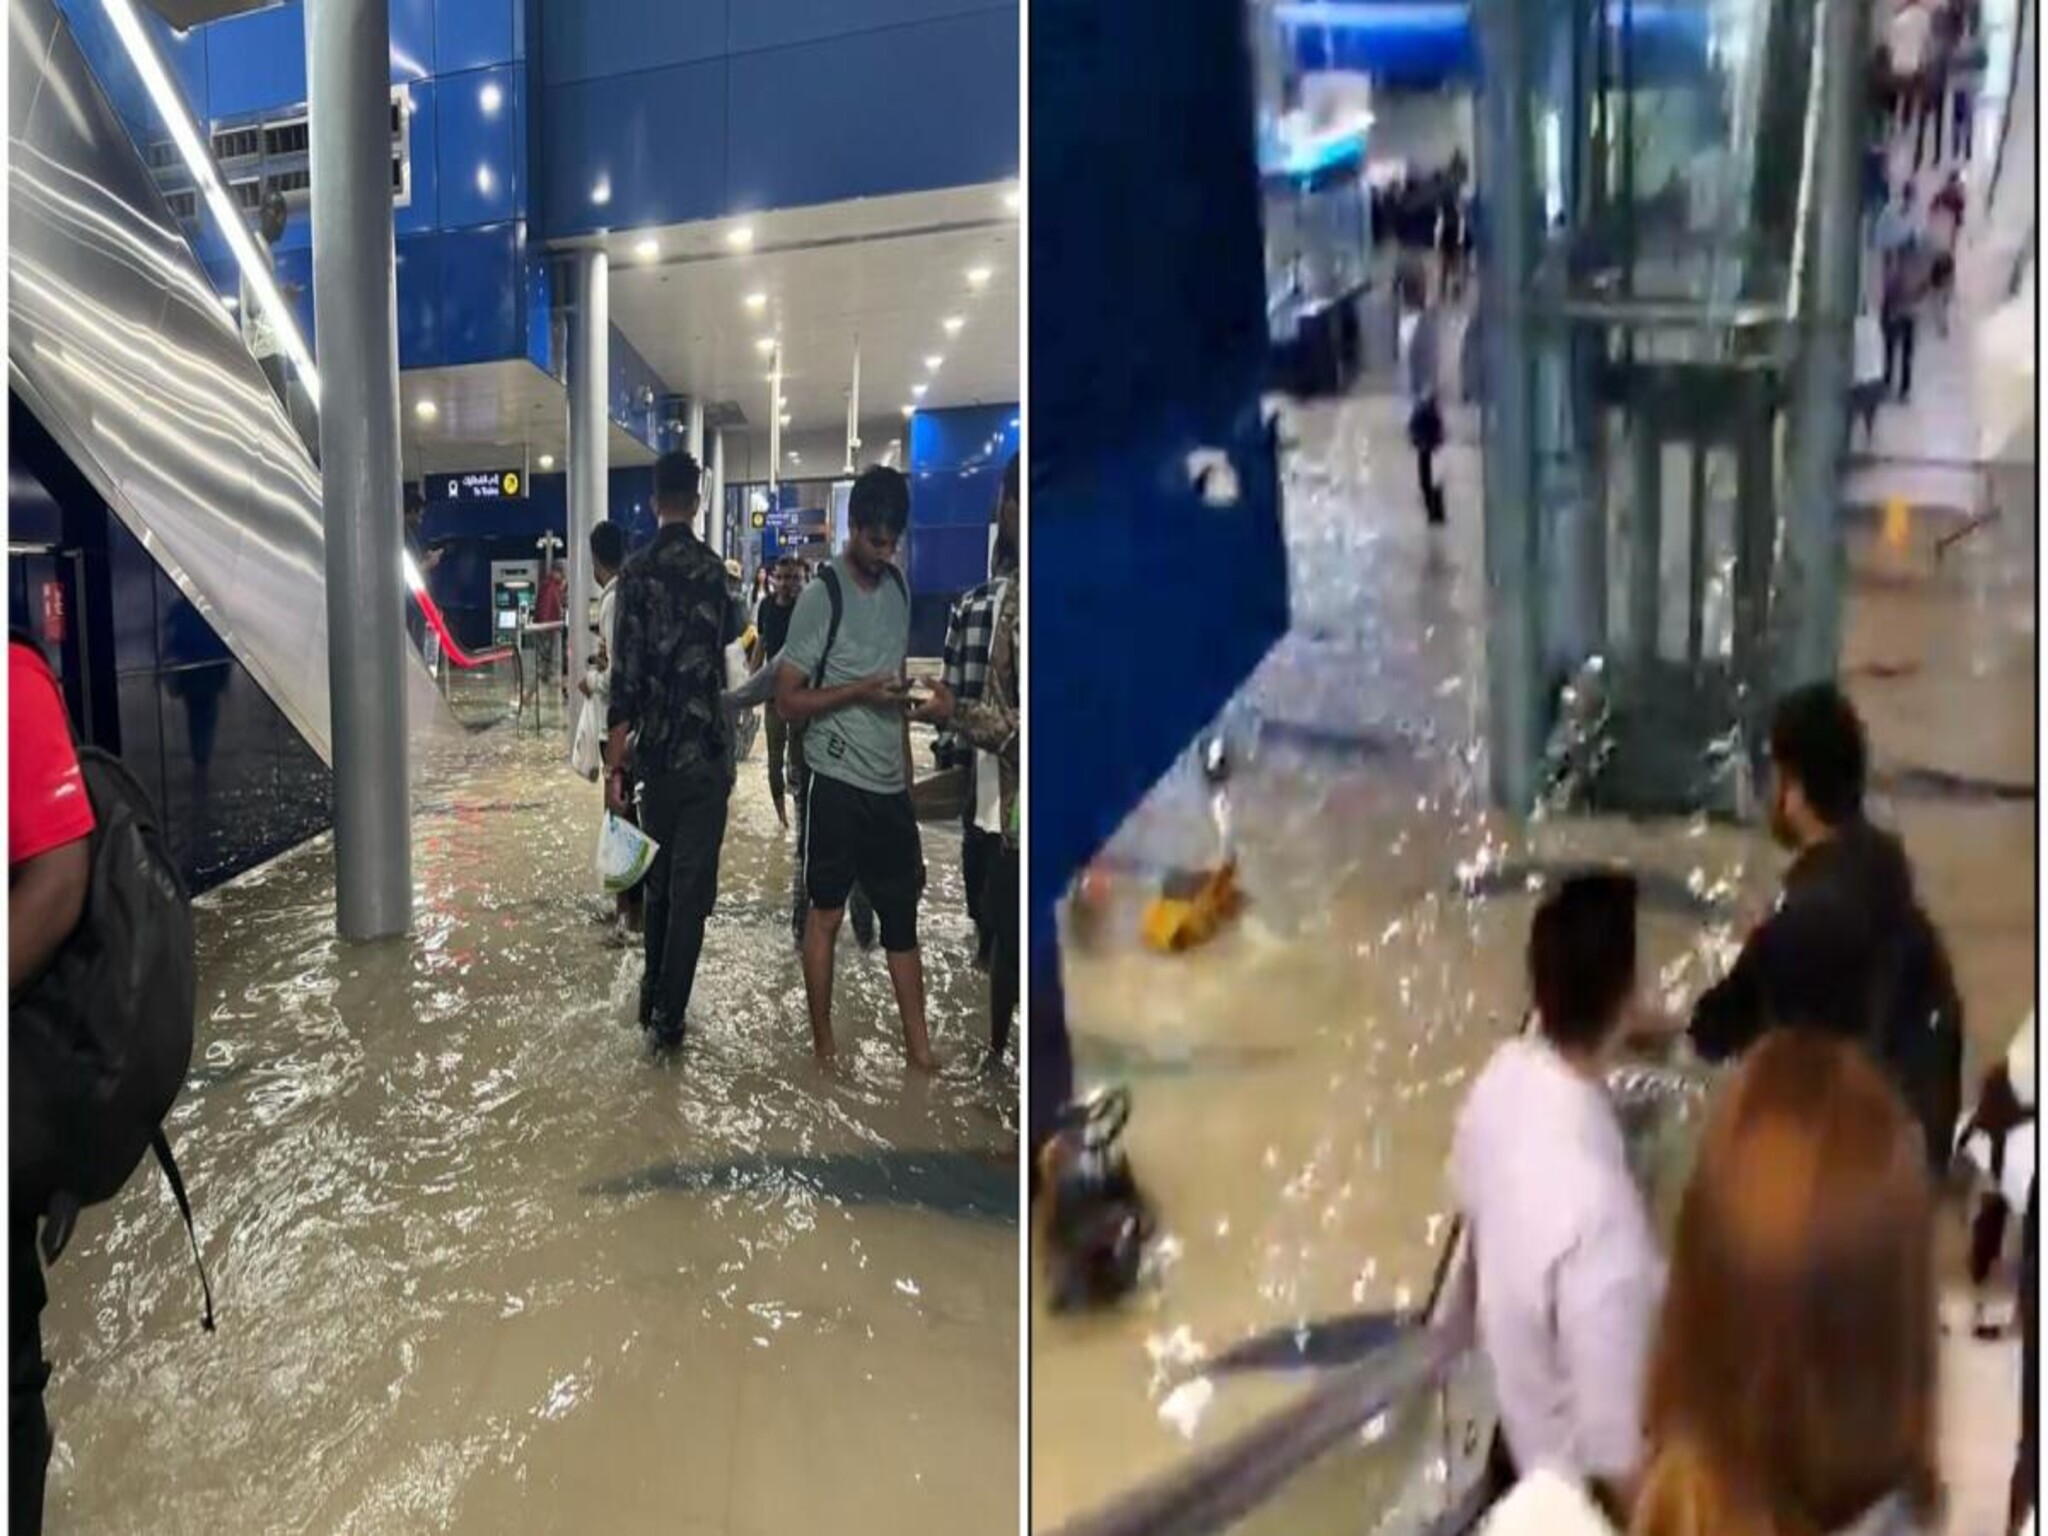 The Dubai Metro station floods due to heavy rains, disrupting services